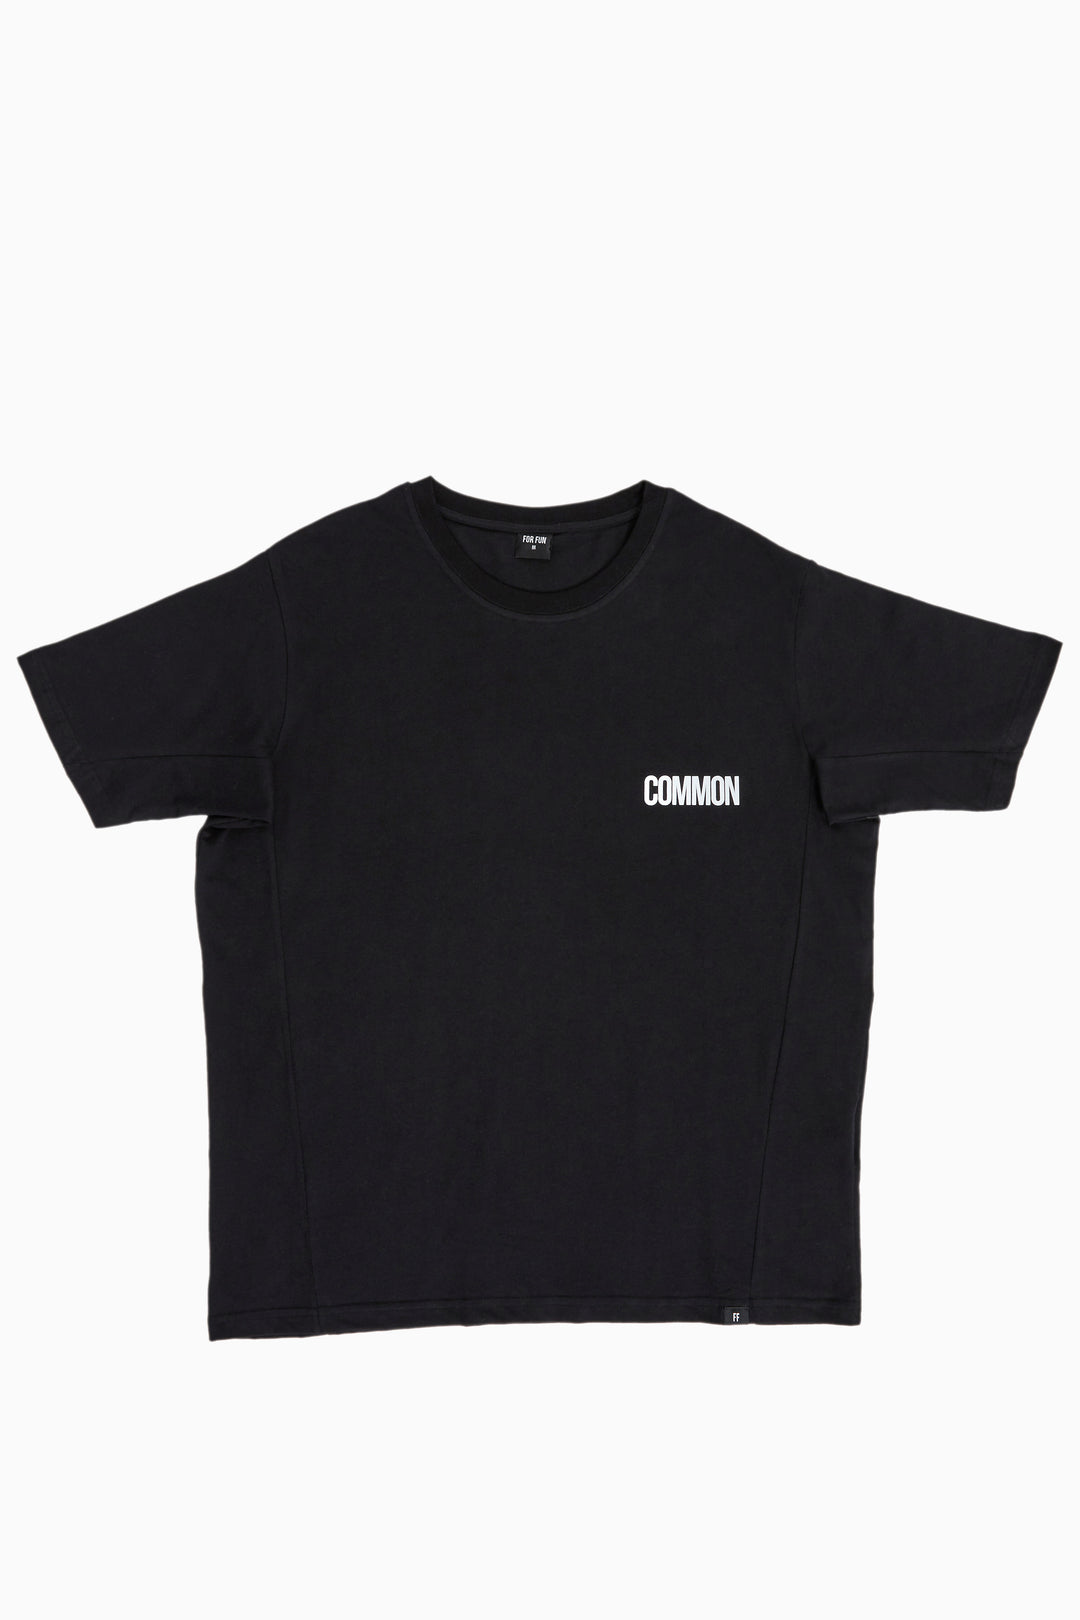 Common / Oversize T-shirt